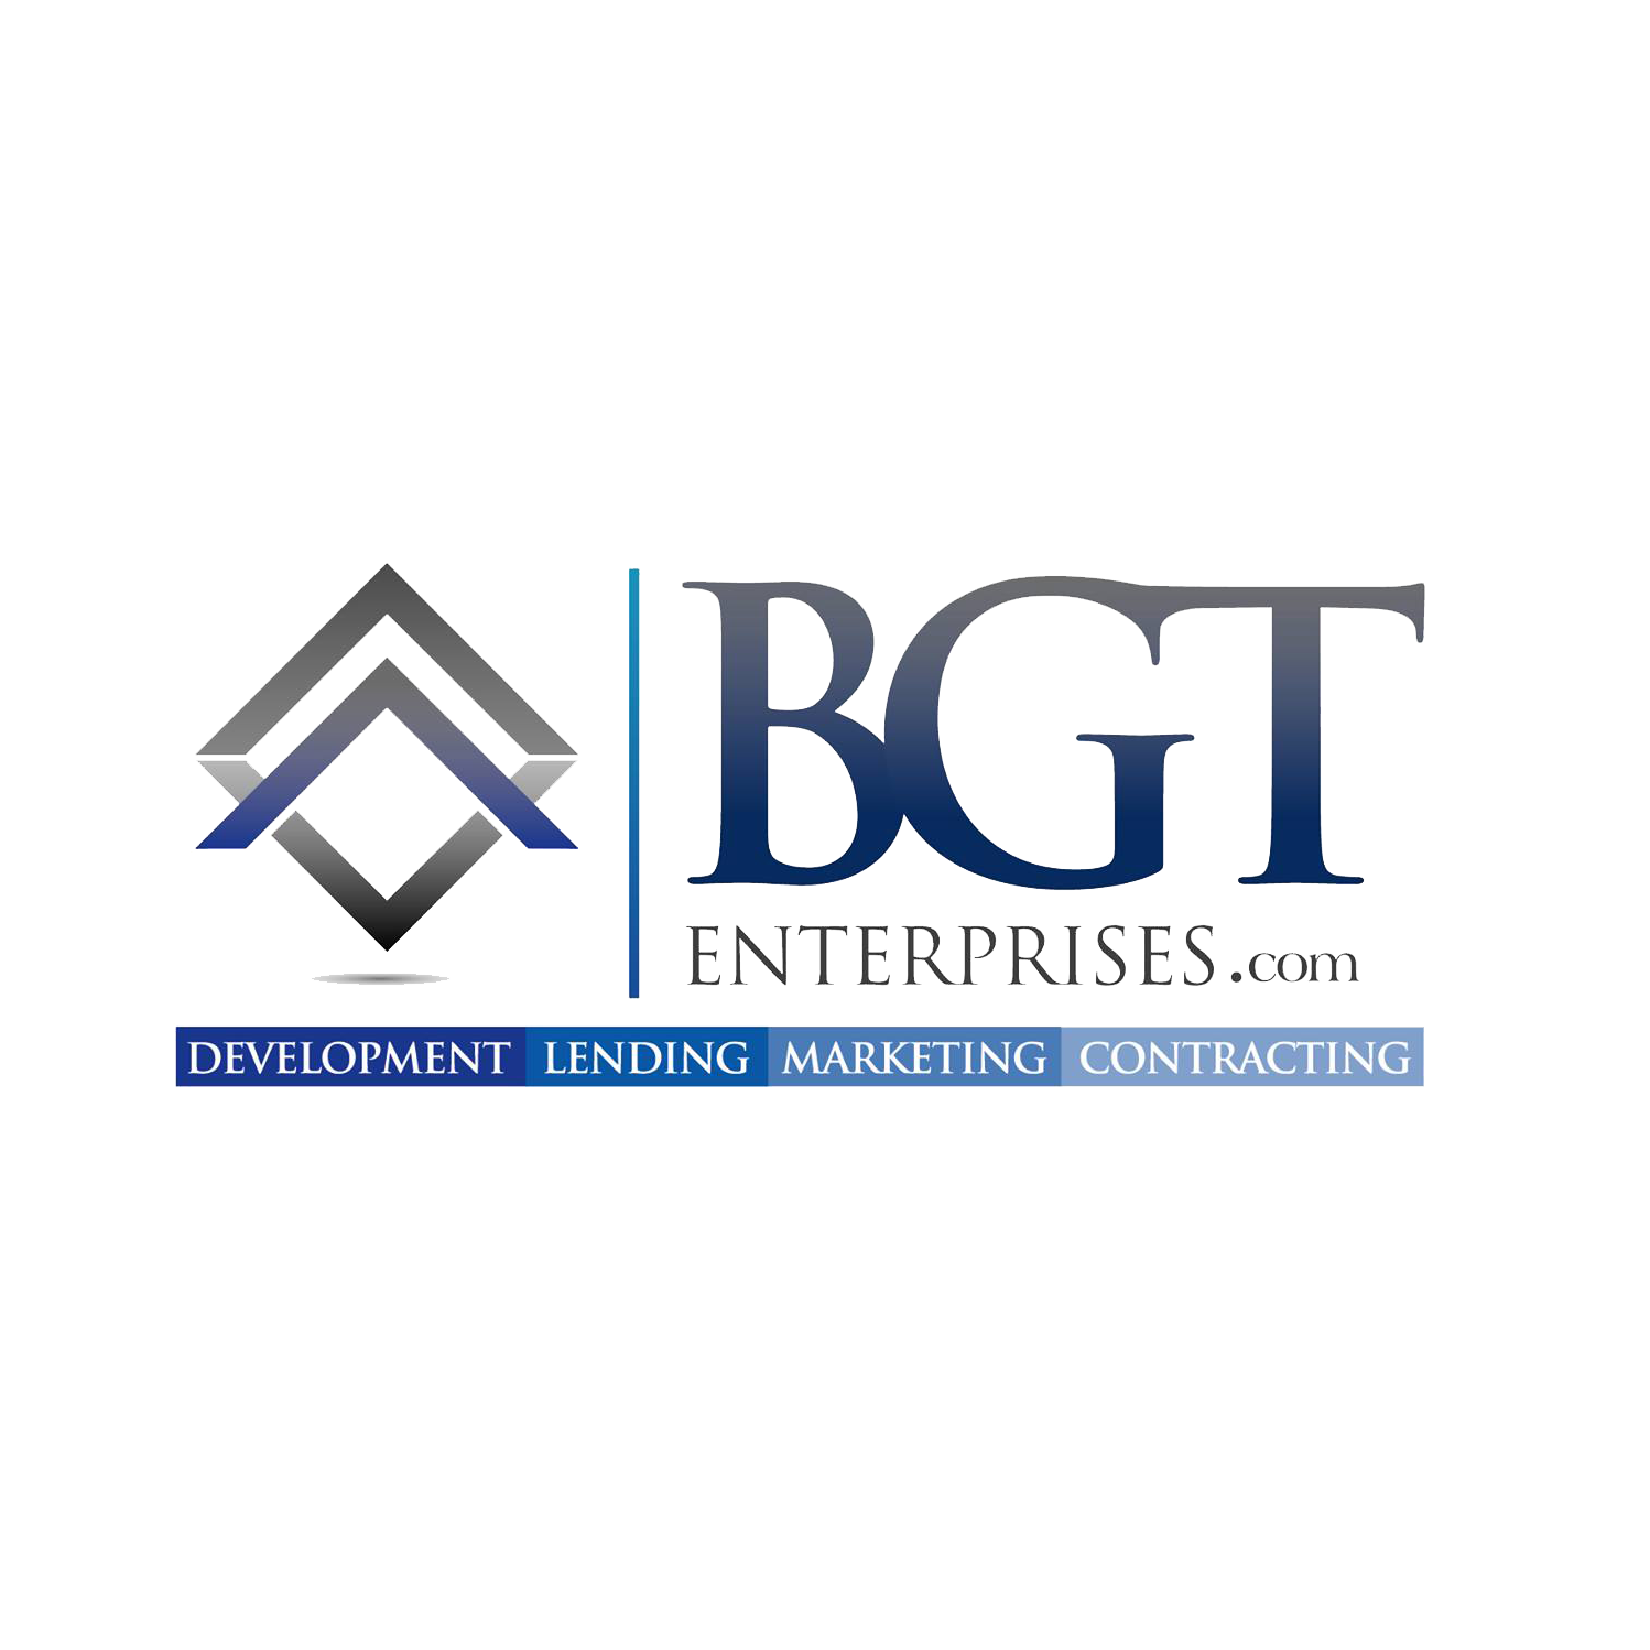 BGT Enterprises-01.png